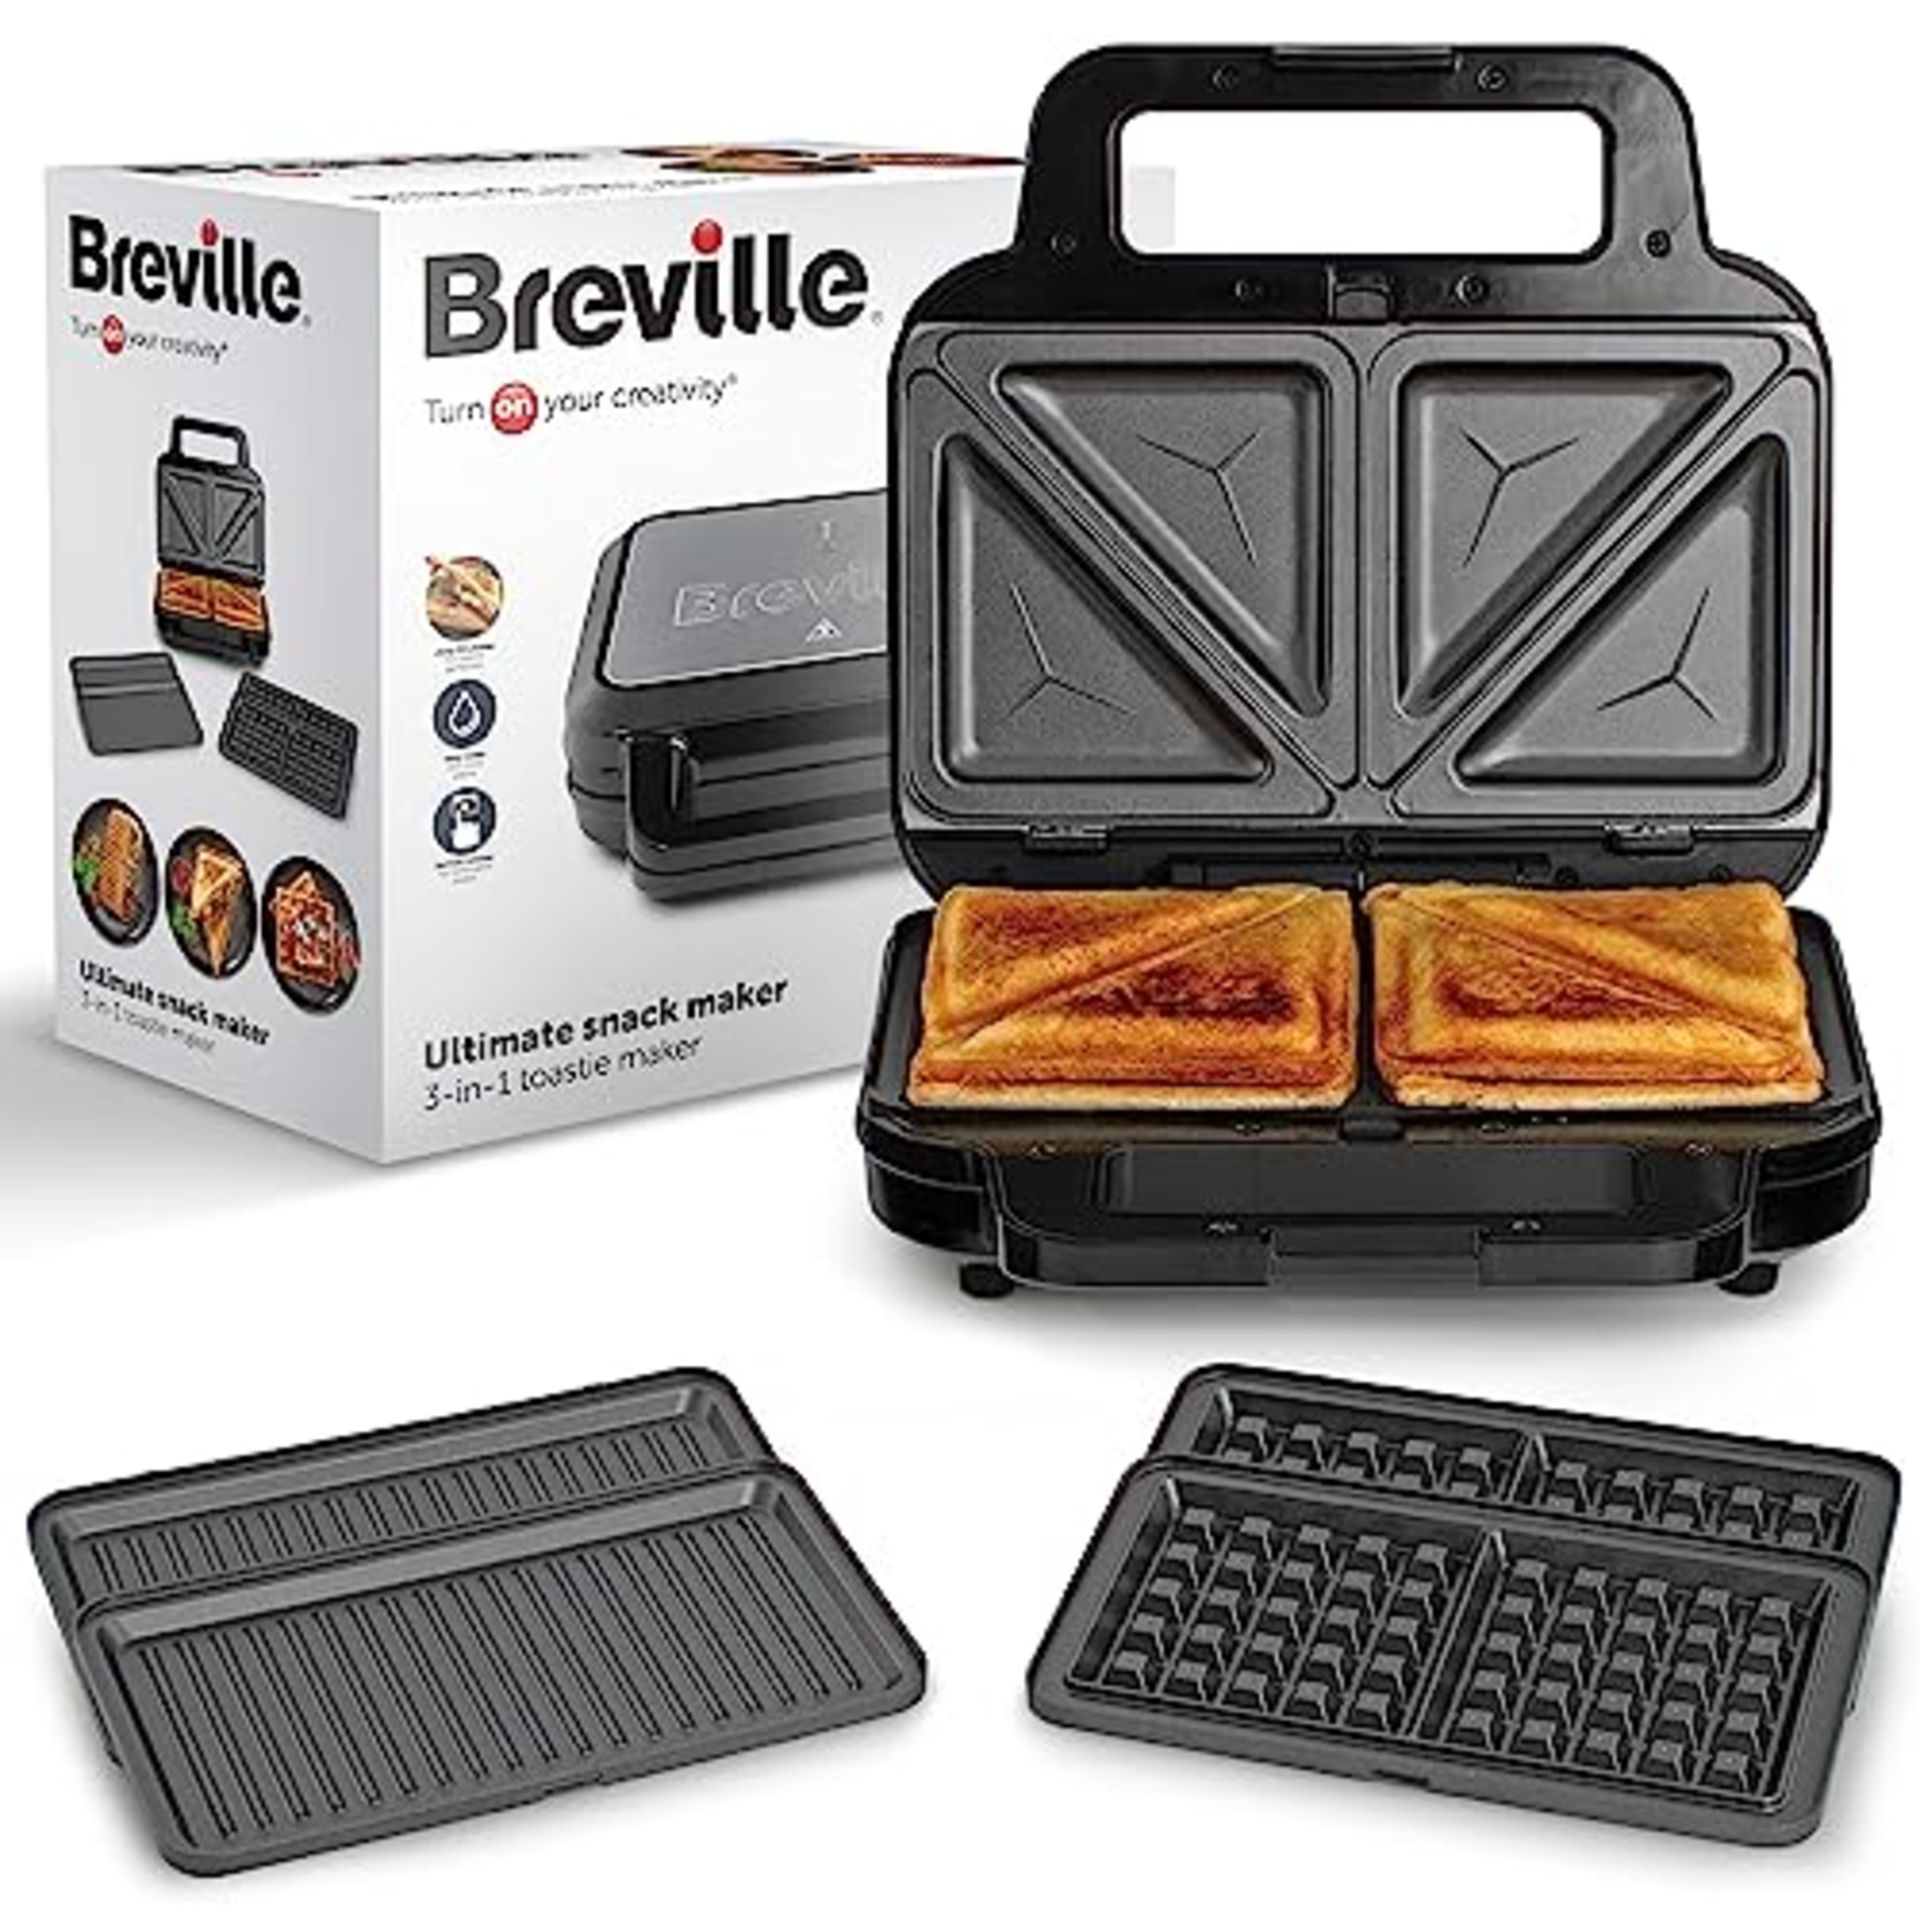 Breville 3-in-1 Ultimate Snack Maker | Deep Fill Toastie Maker, Waffle Maker & Panini